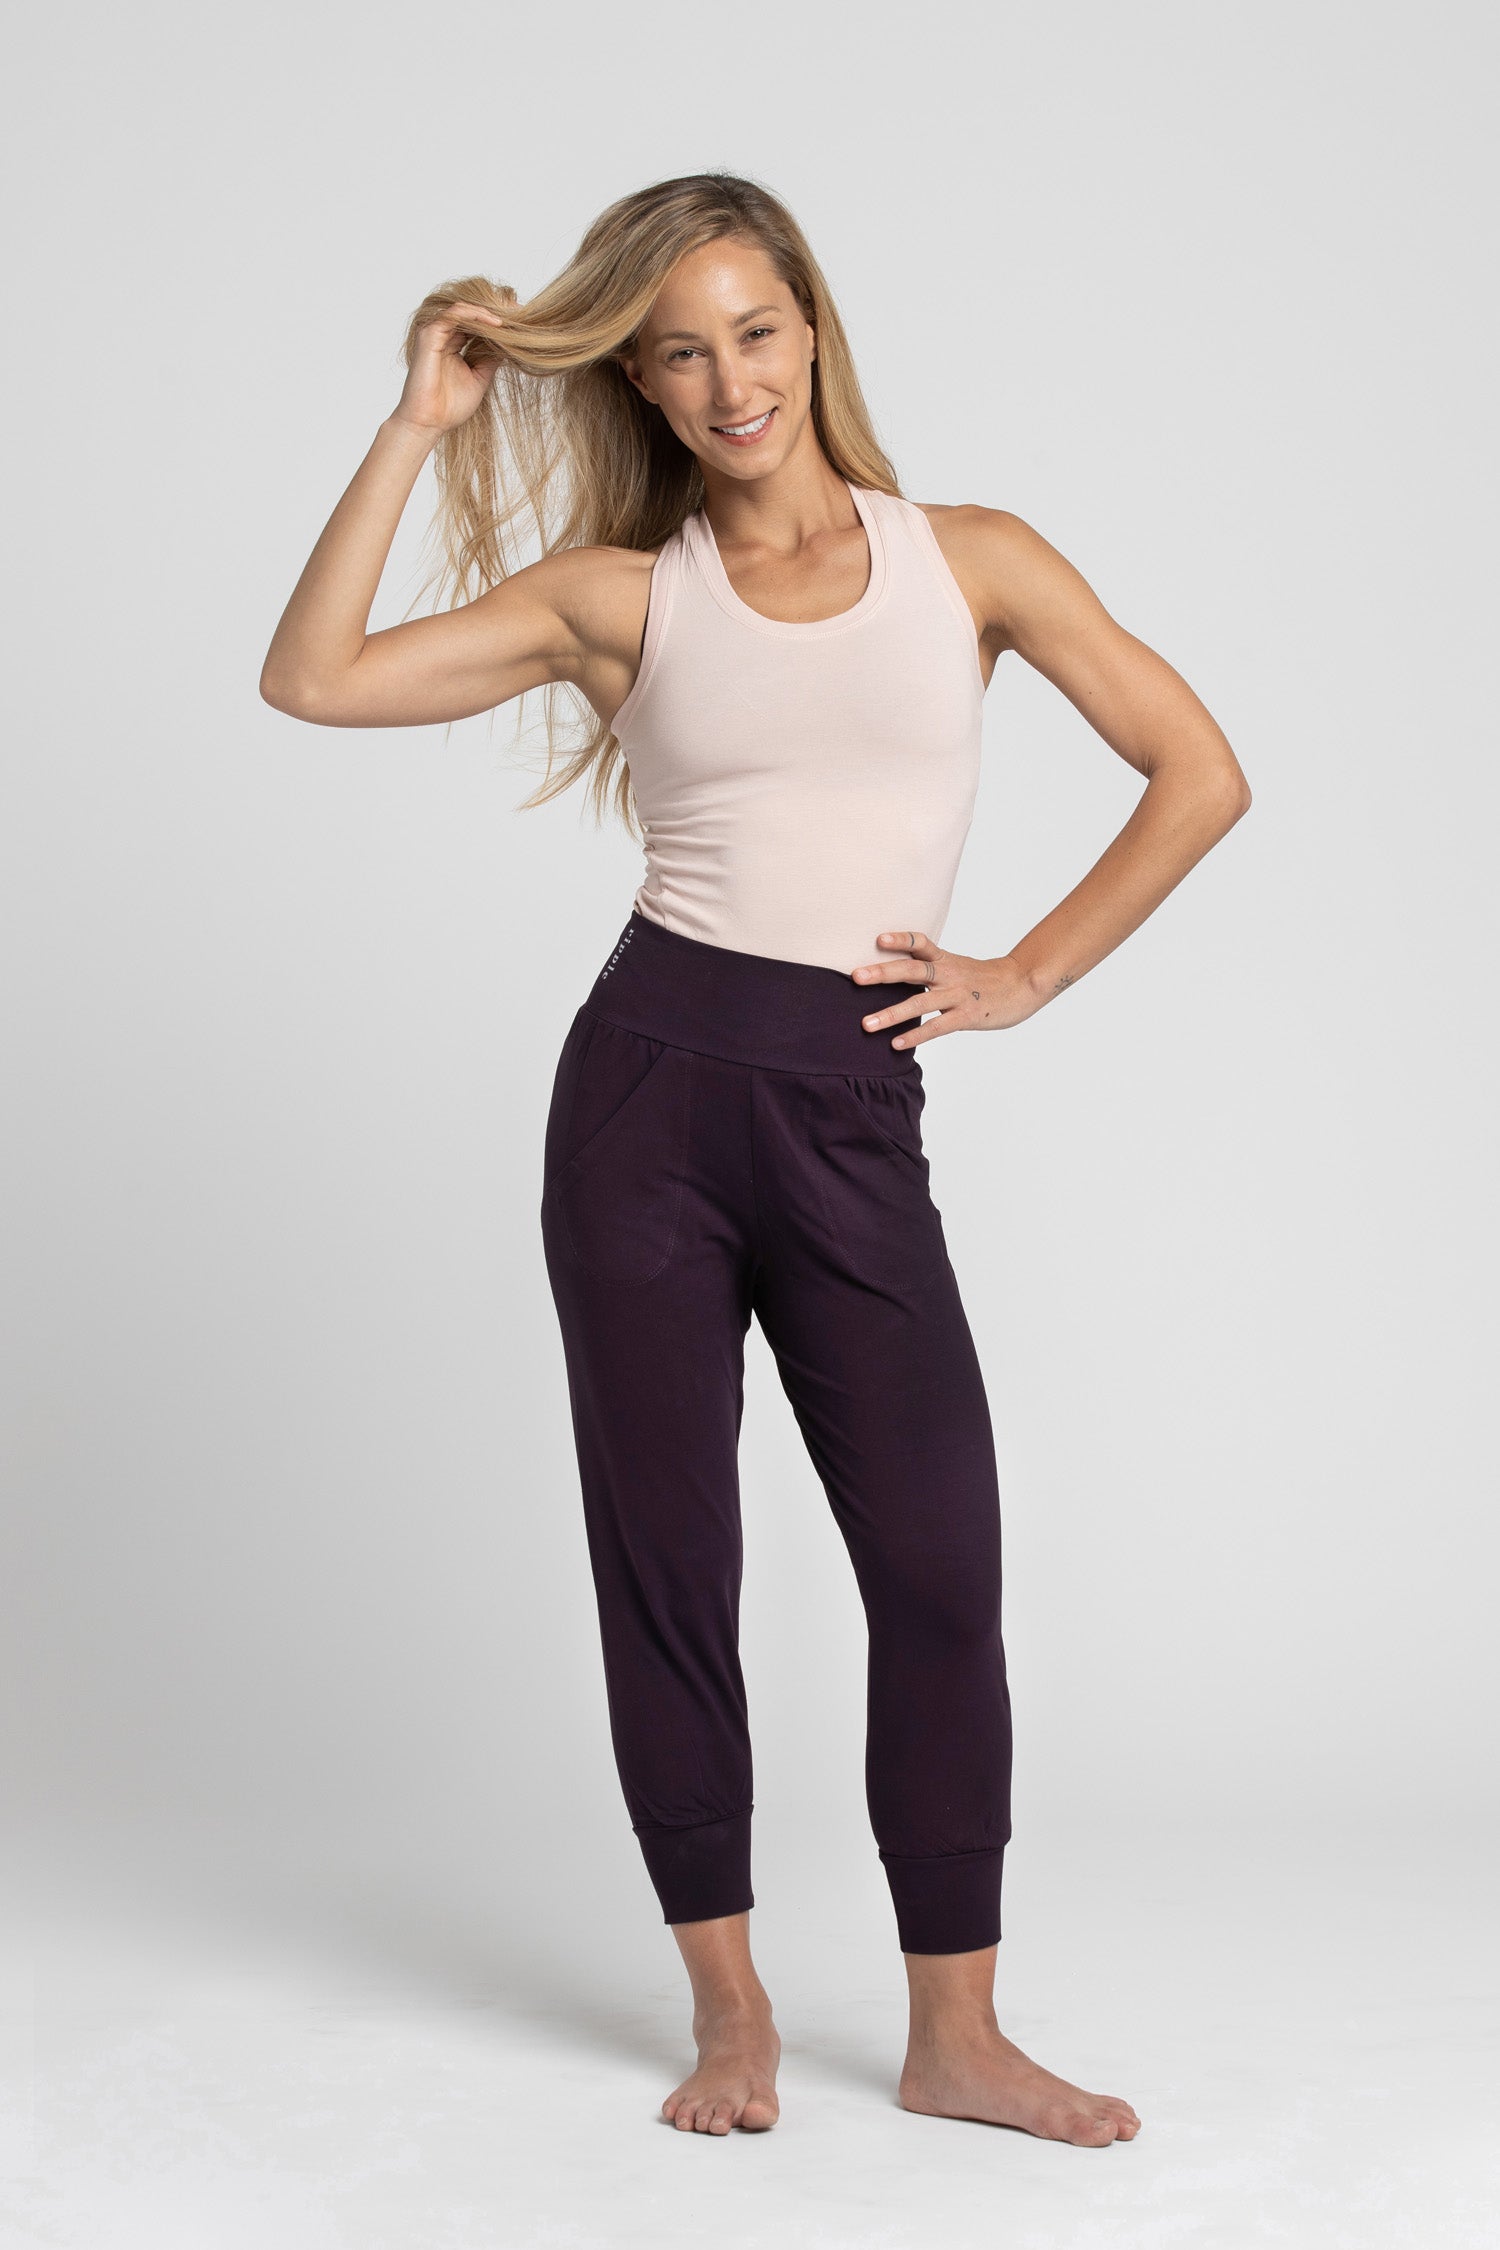  YAWOTS Women Dress Pants Solid Color Yoga Pants High